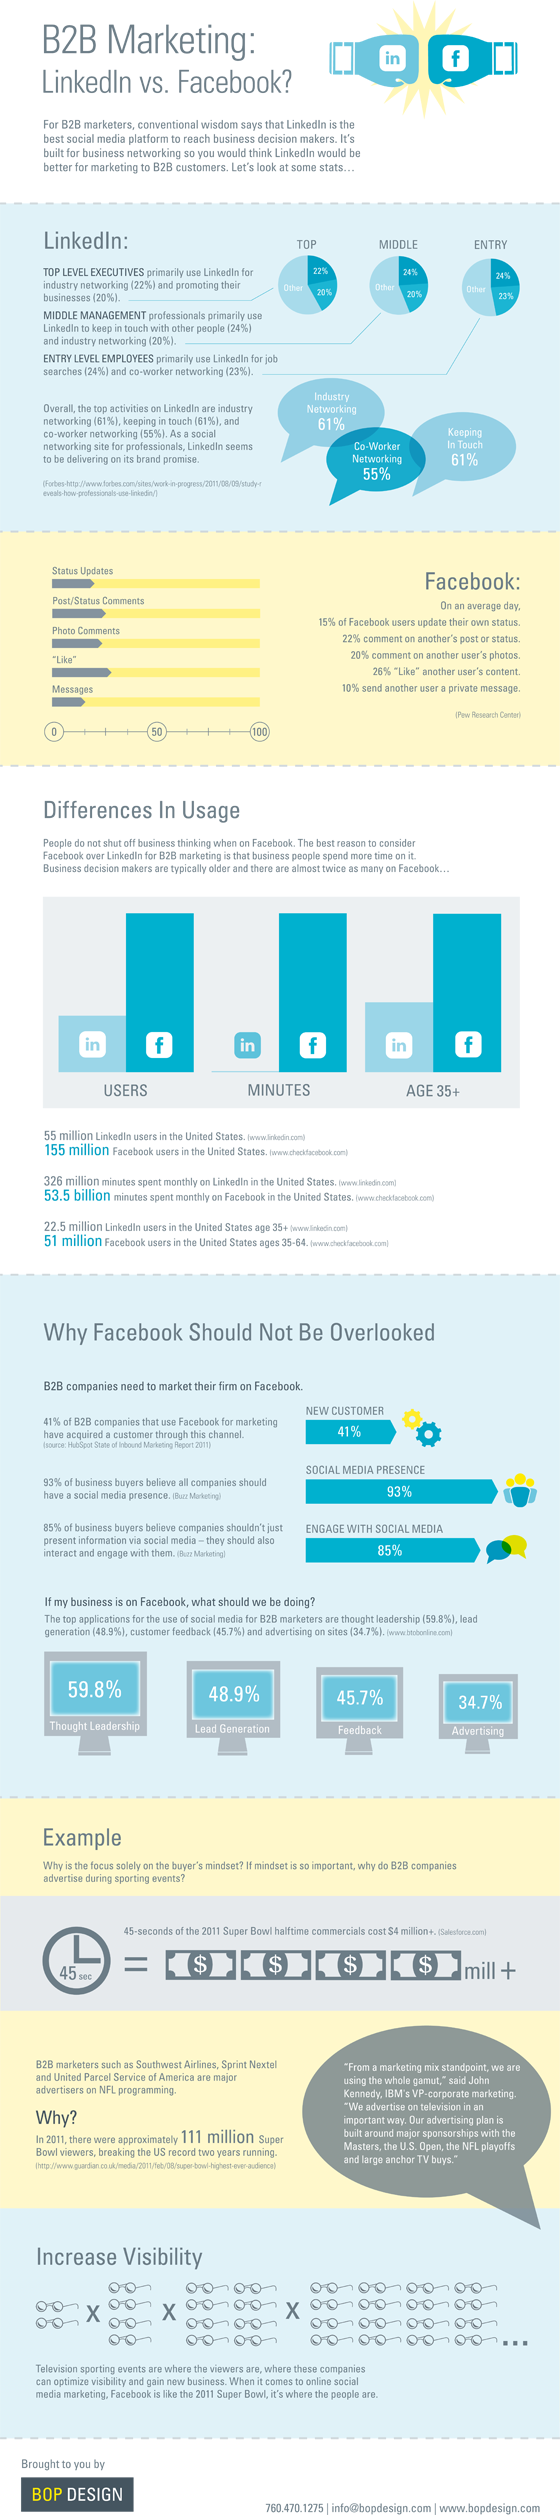 Linkedin-vs-Facebook-B2B-marketing-infographic Social Media Strategy Romania